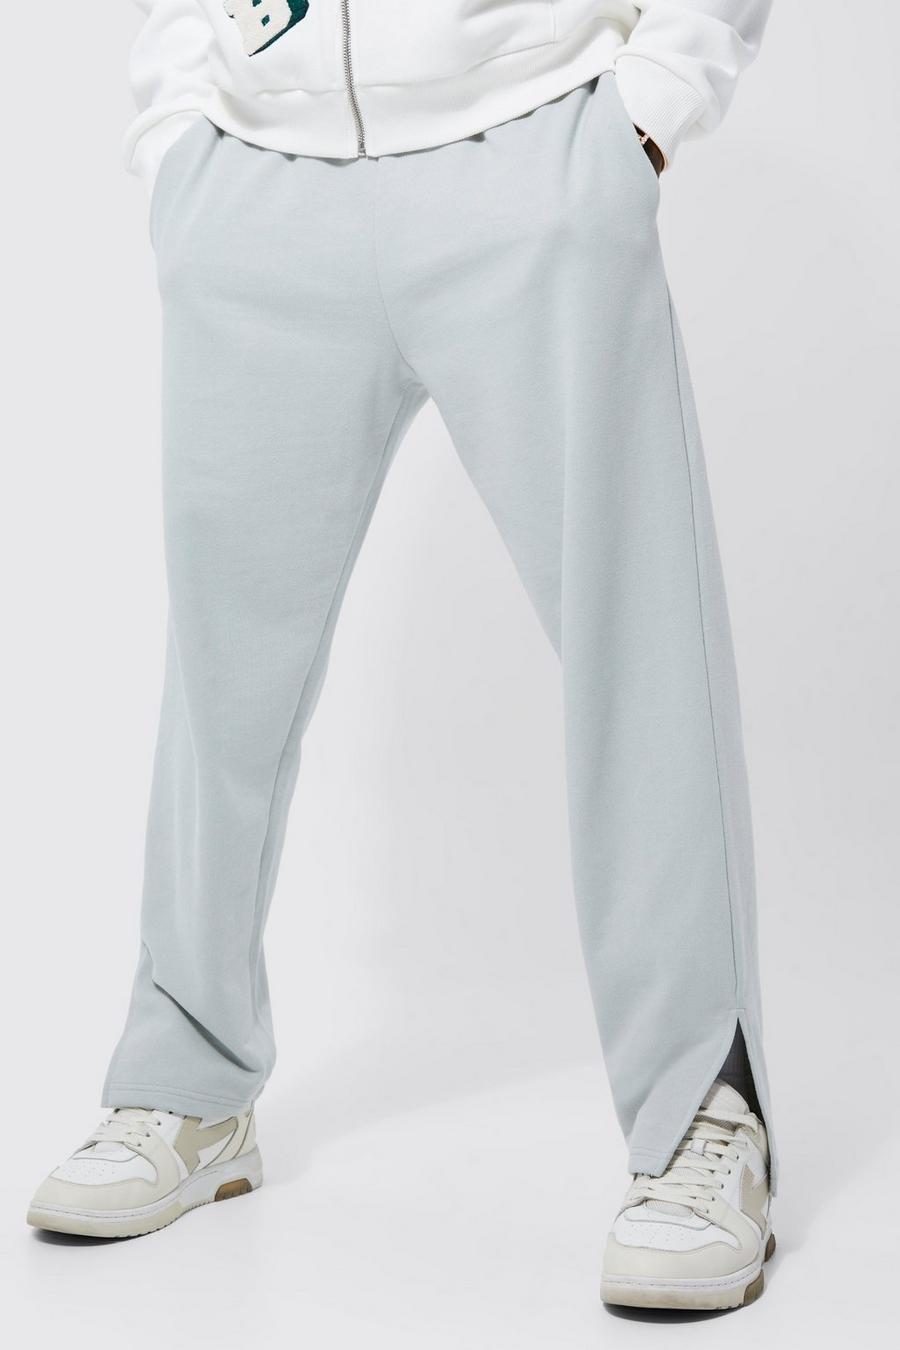 Pantaloni tuta oversize Man Official con spacco sul fondo, Khaki